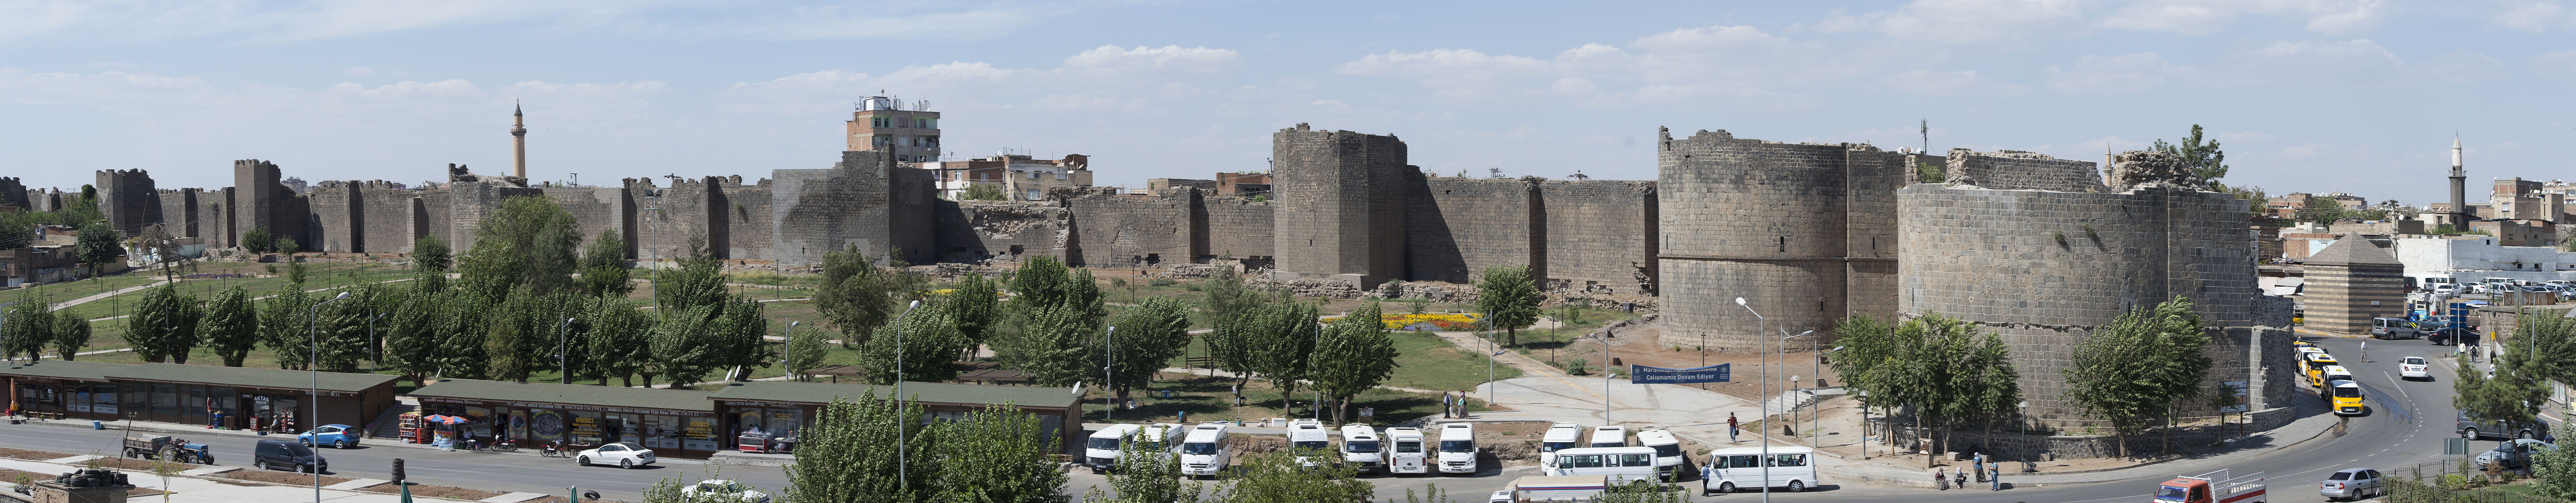 Diyarbakir Walls at Mardin Kapi september 2014 3779 panorama.jpg